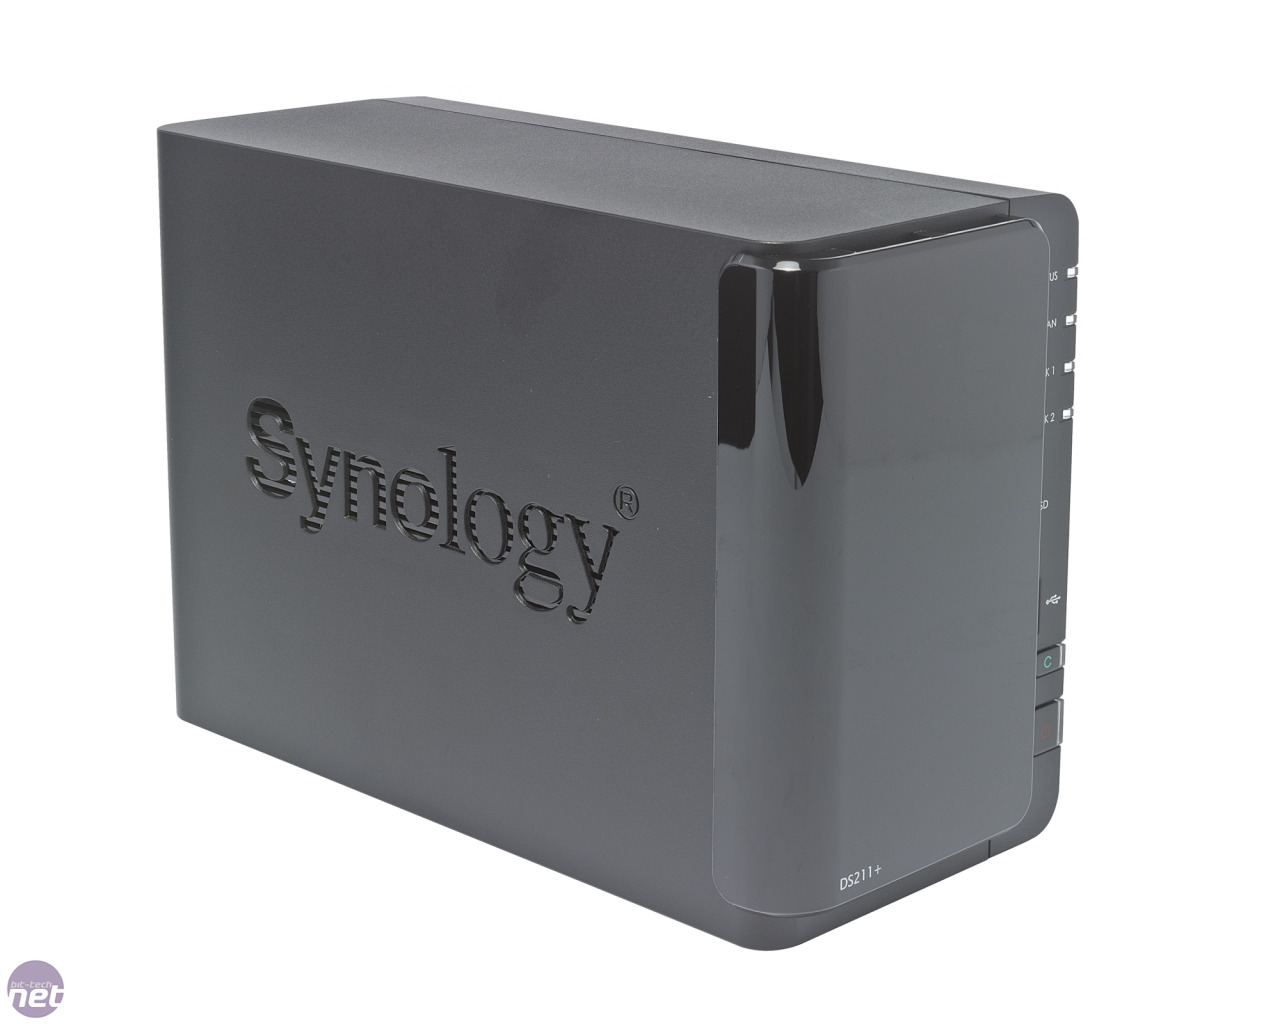 Synology DiskStation DS211+ Review bit-tech.net